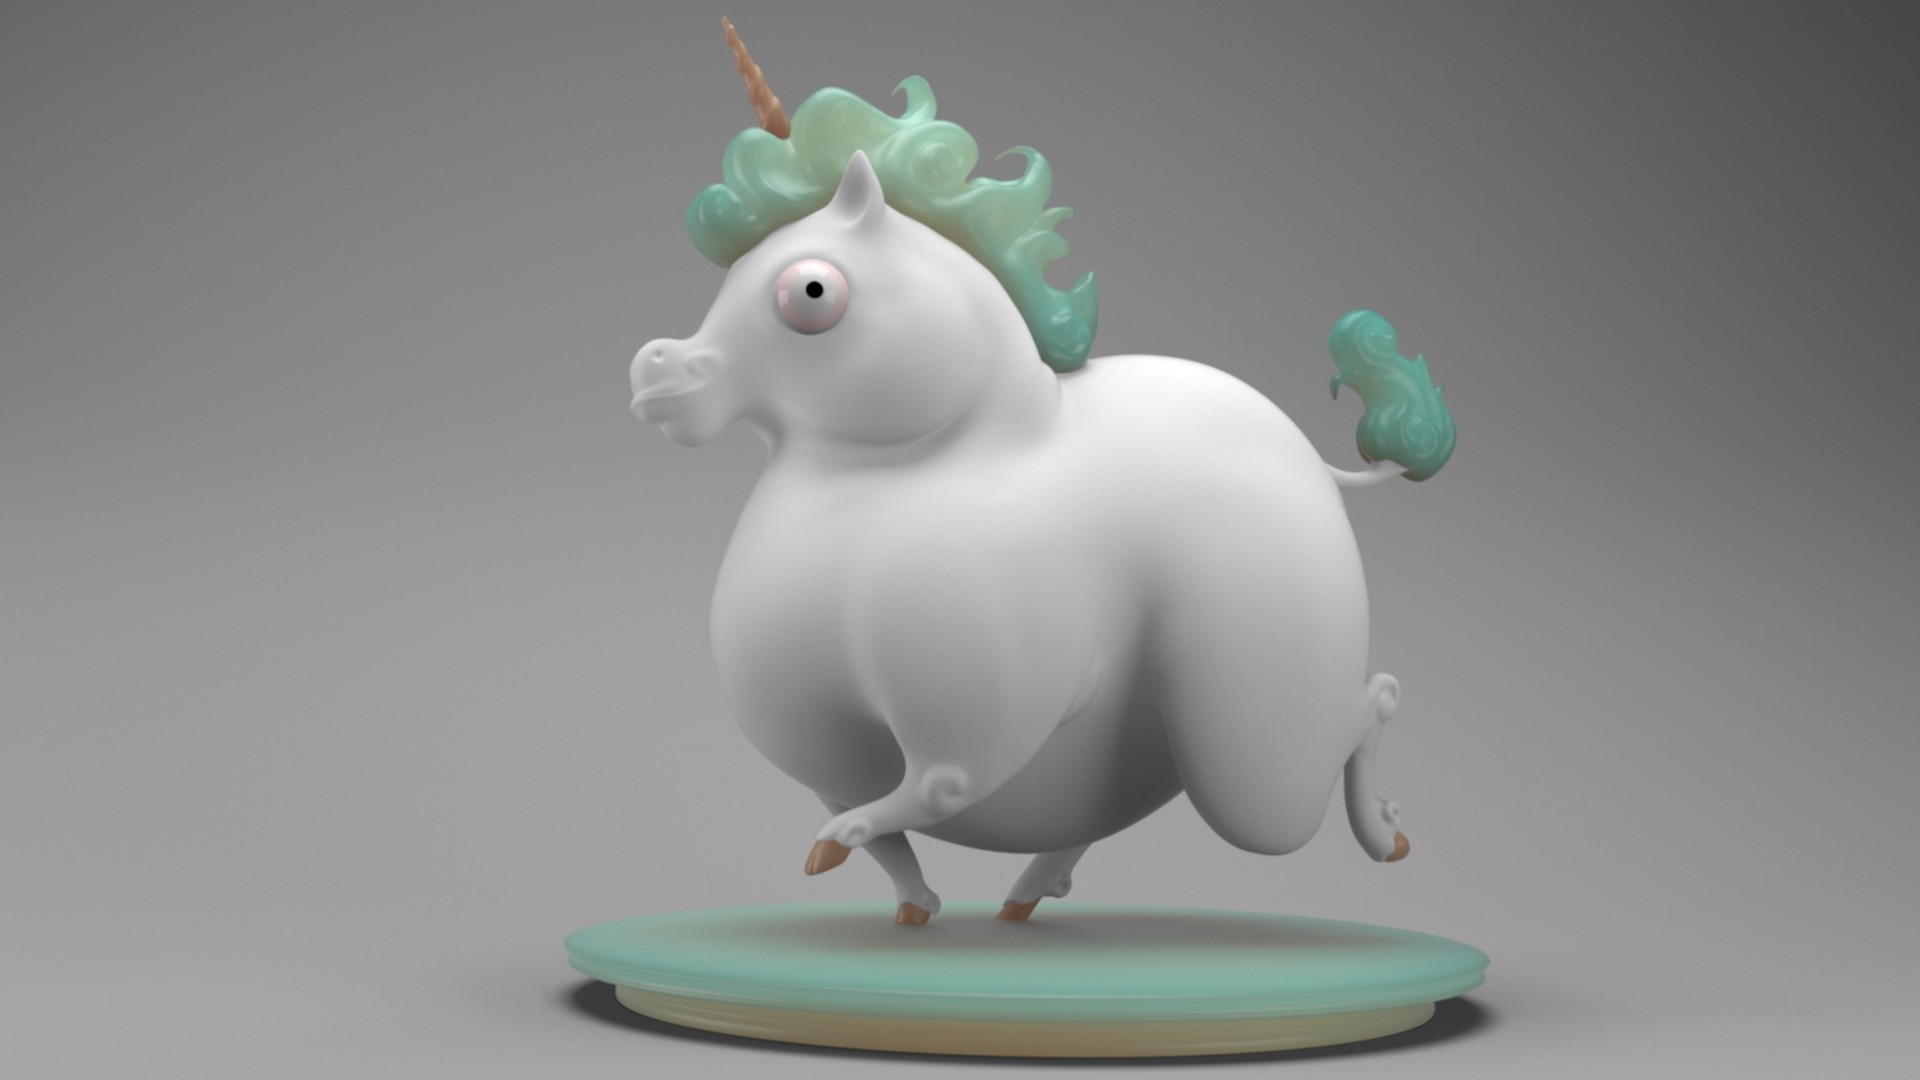 Fat Unicorn